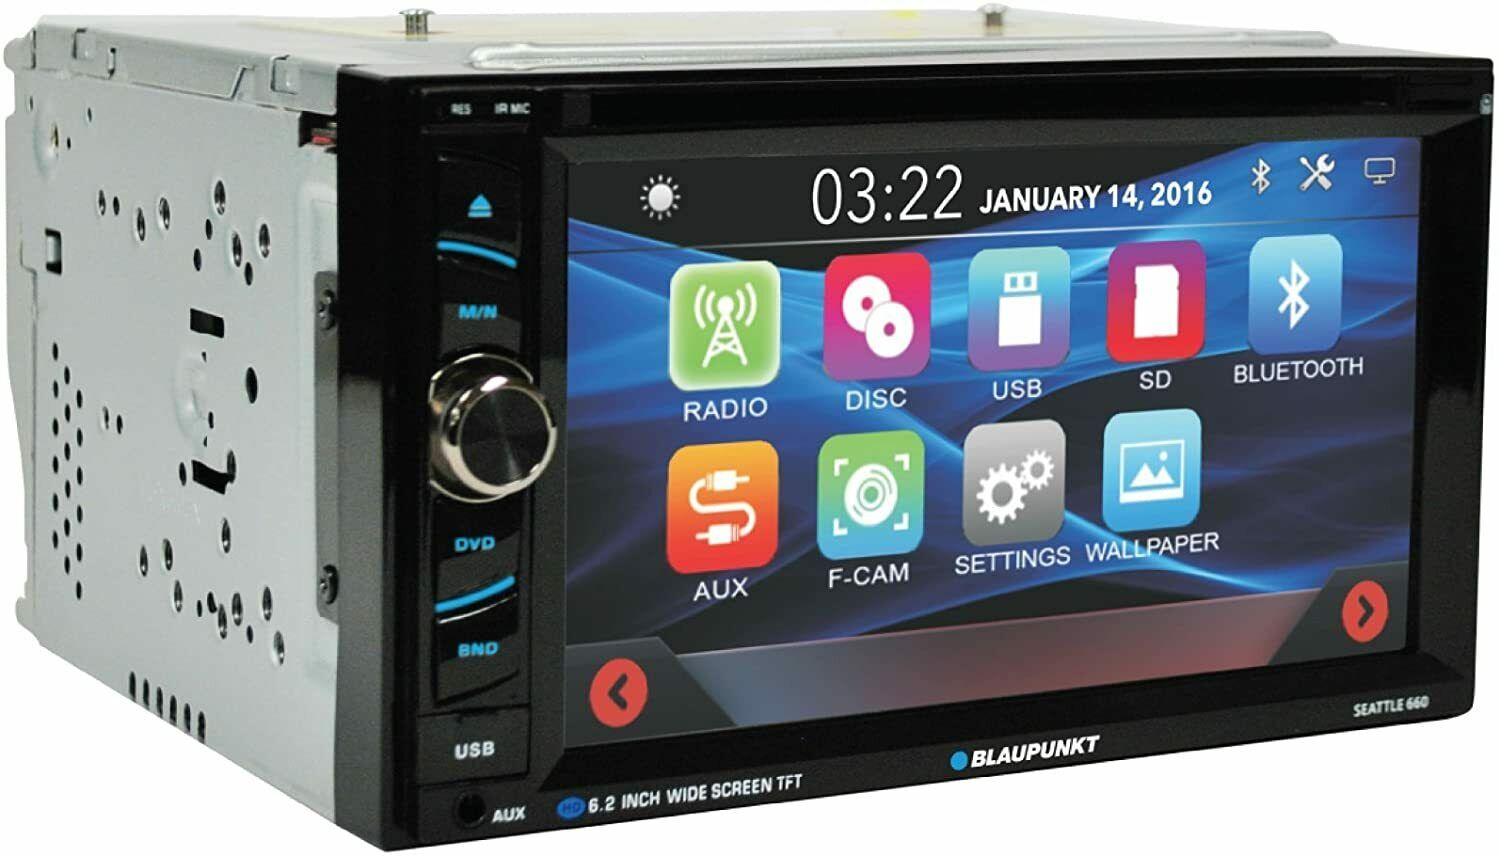 Blaupunkt SEATTLE 660 6.2" Car Audio In Dash Touch Screen Bluetooth Stereo